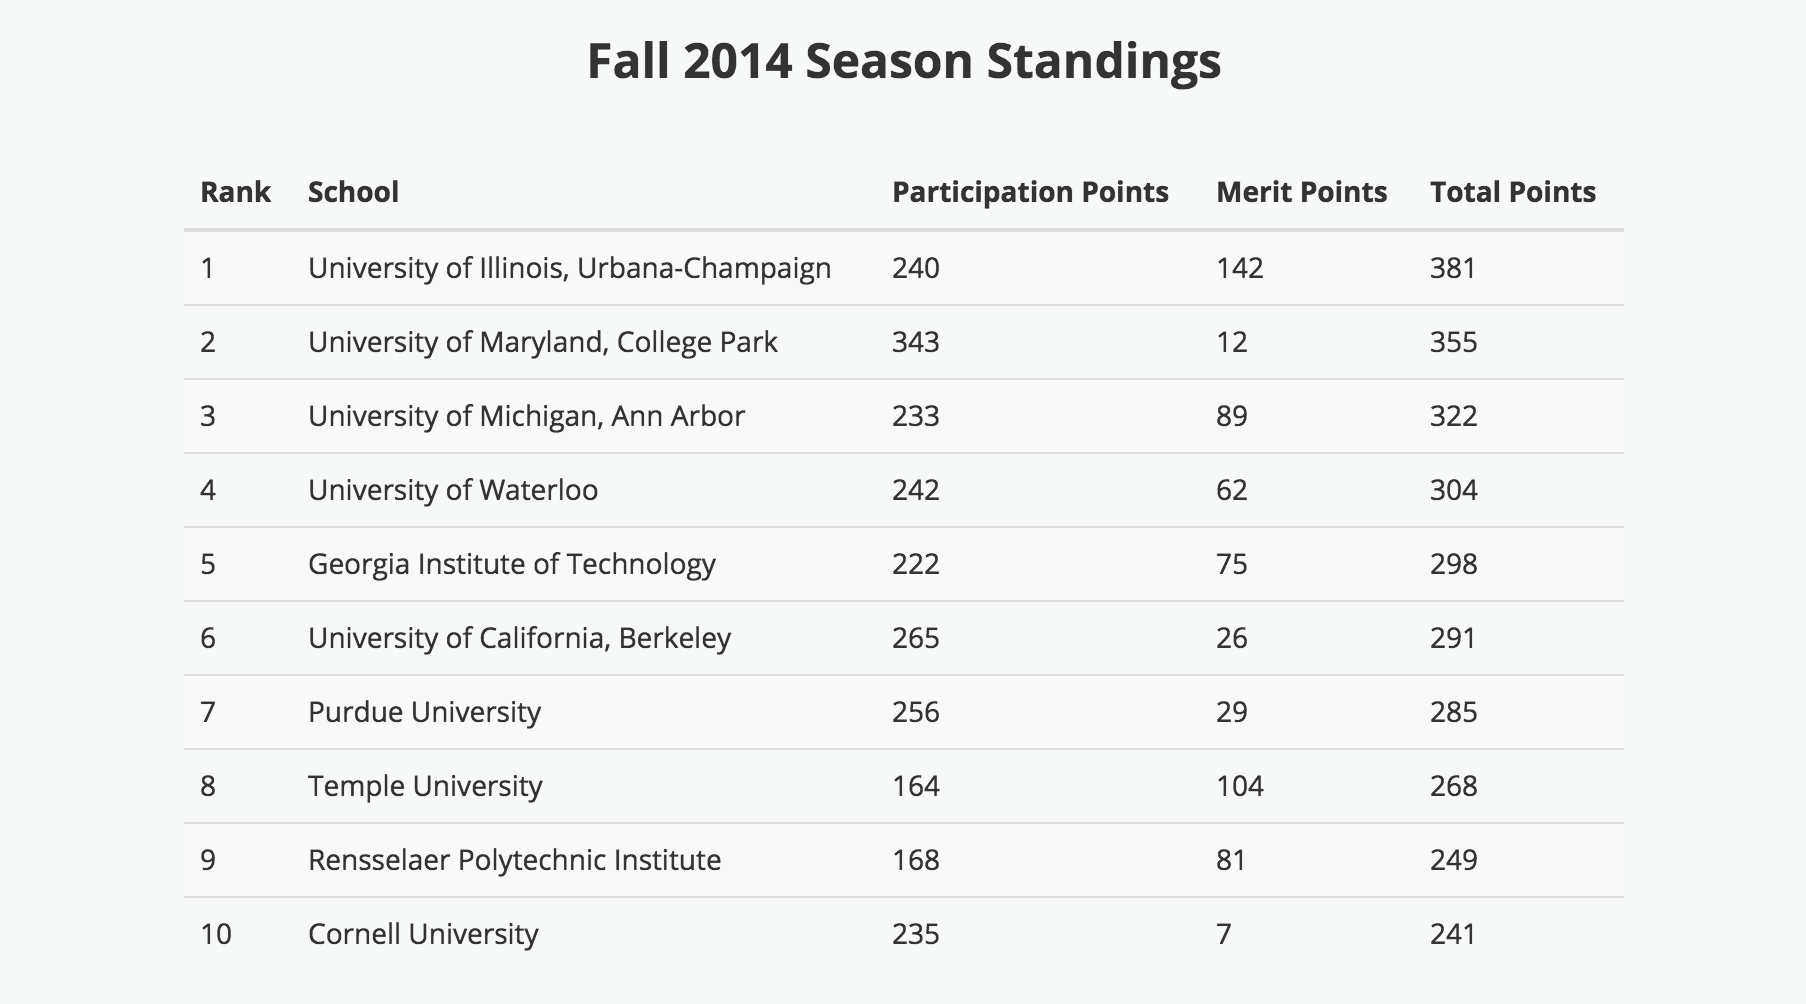 Fall 2014 season standings